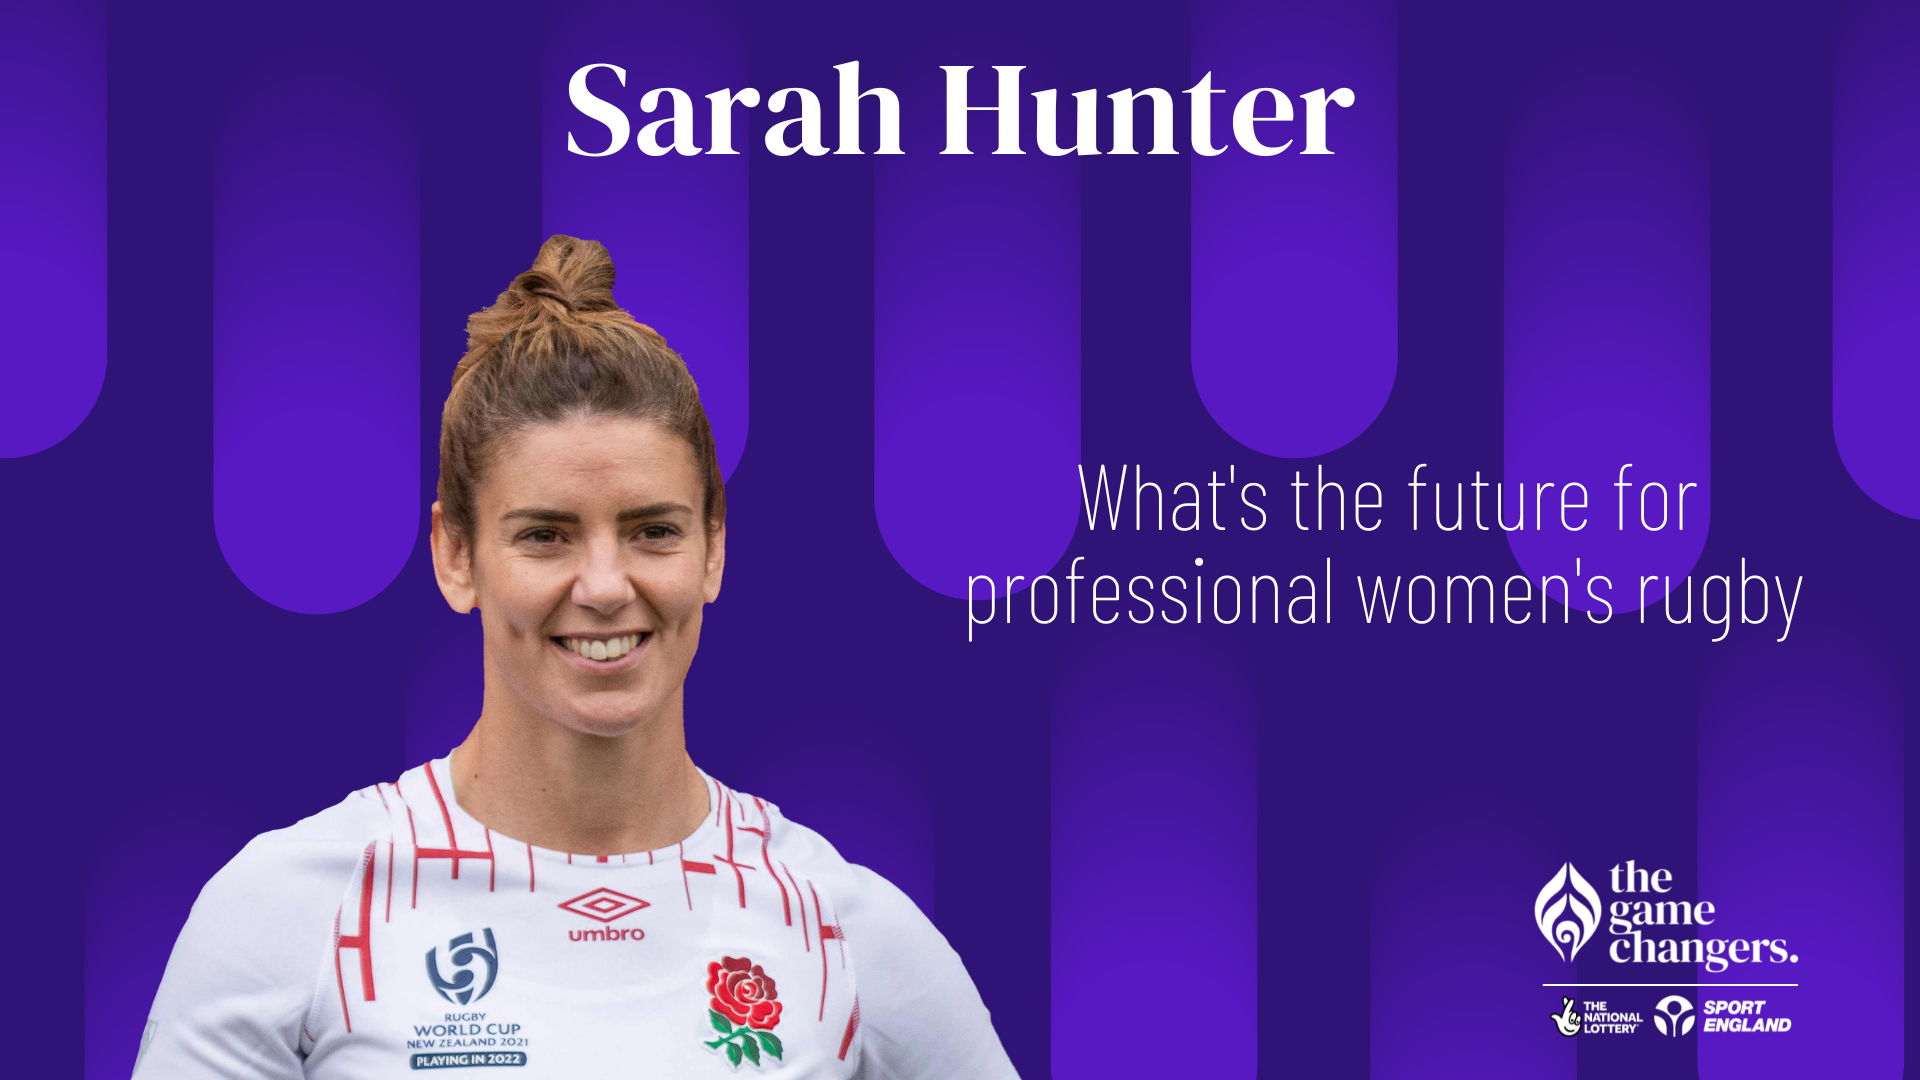 Sarah Hunter on the Gamechangers podcast